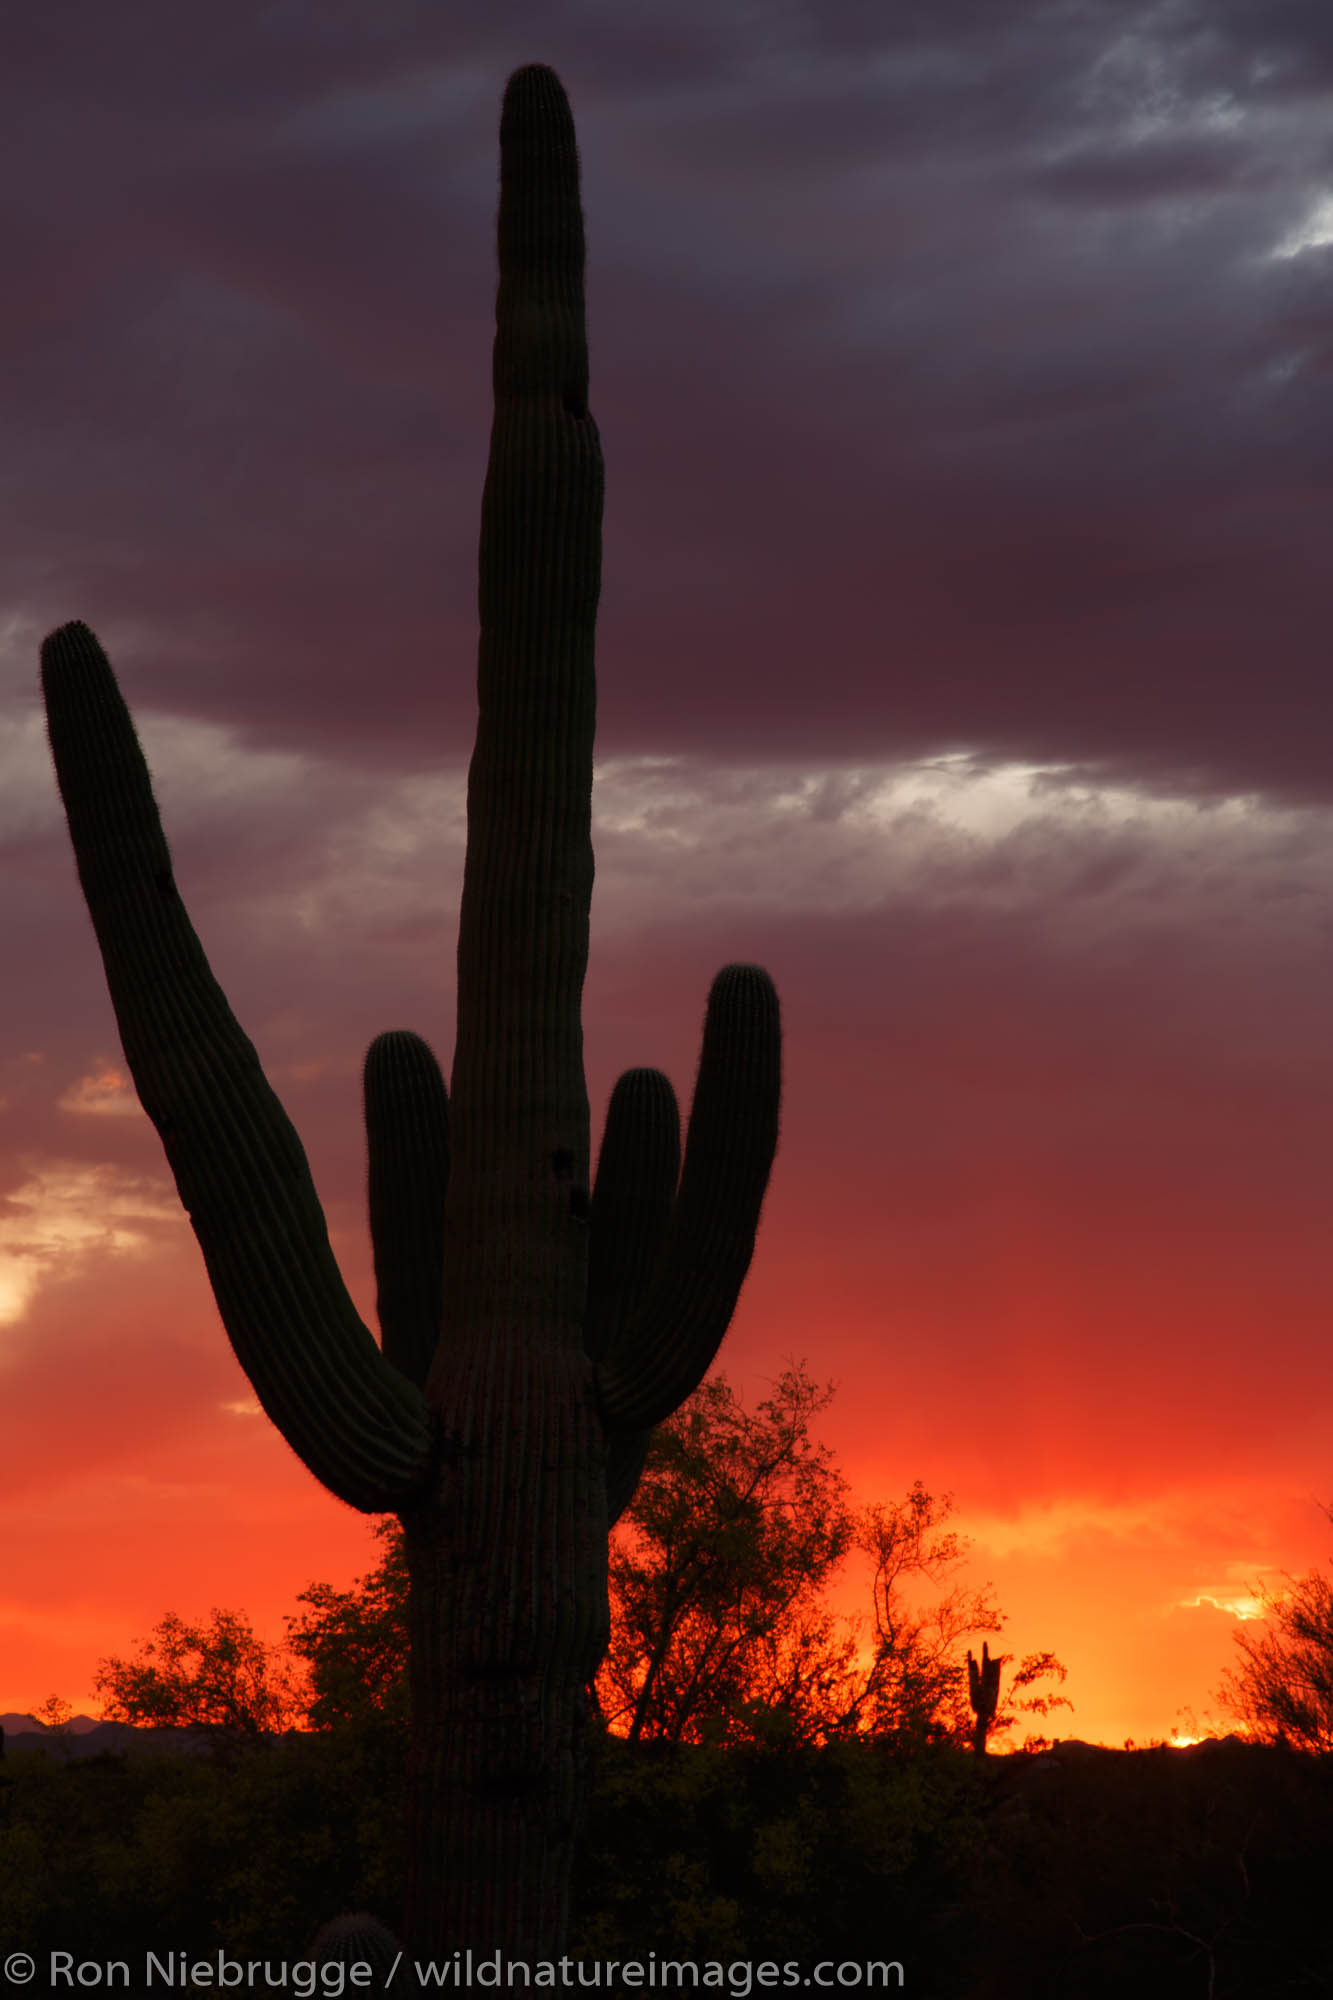 Saguaro cactus at sunset, Scottsdale, Arizona.